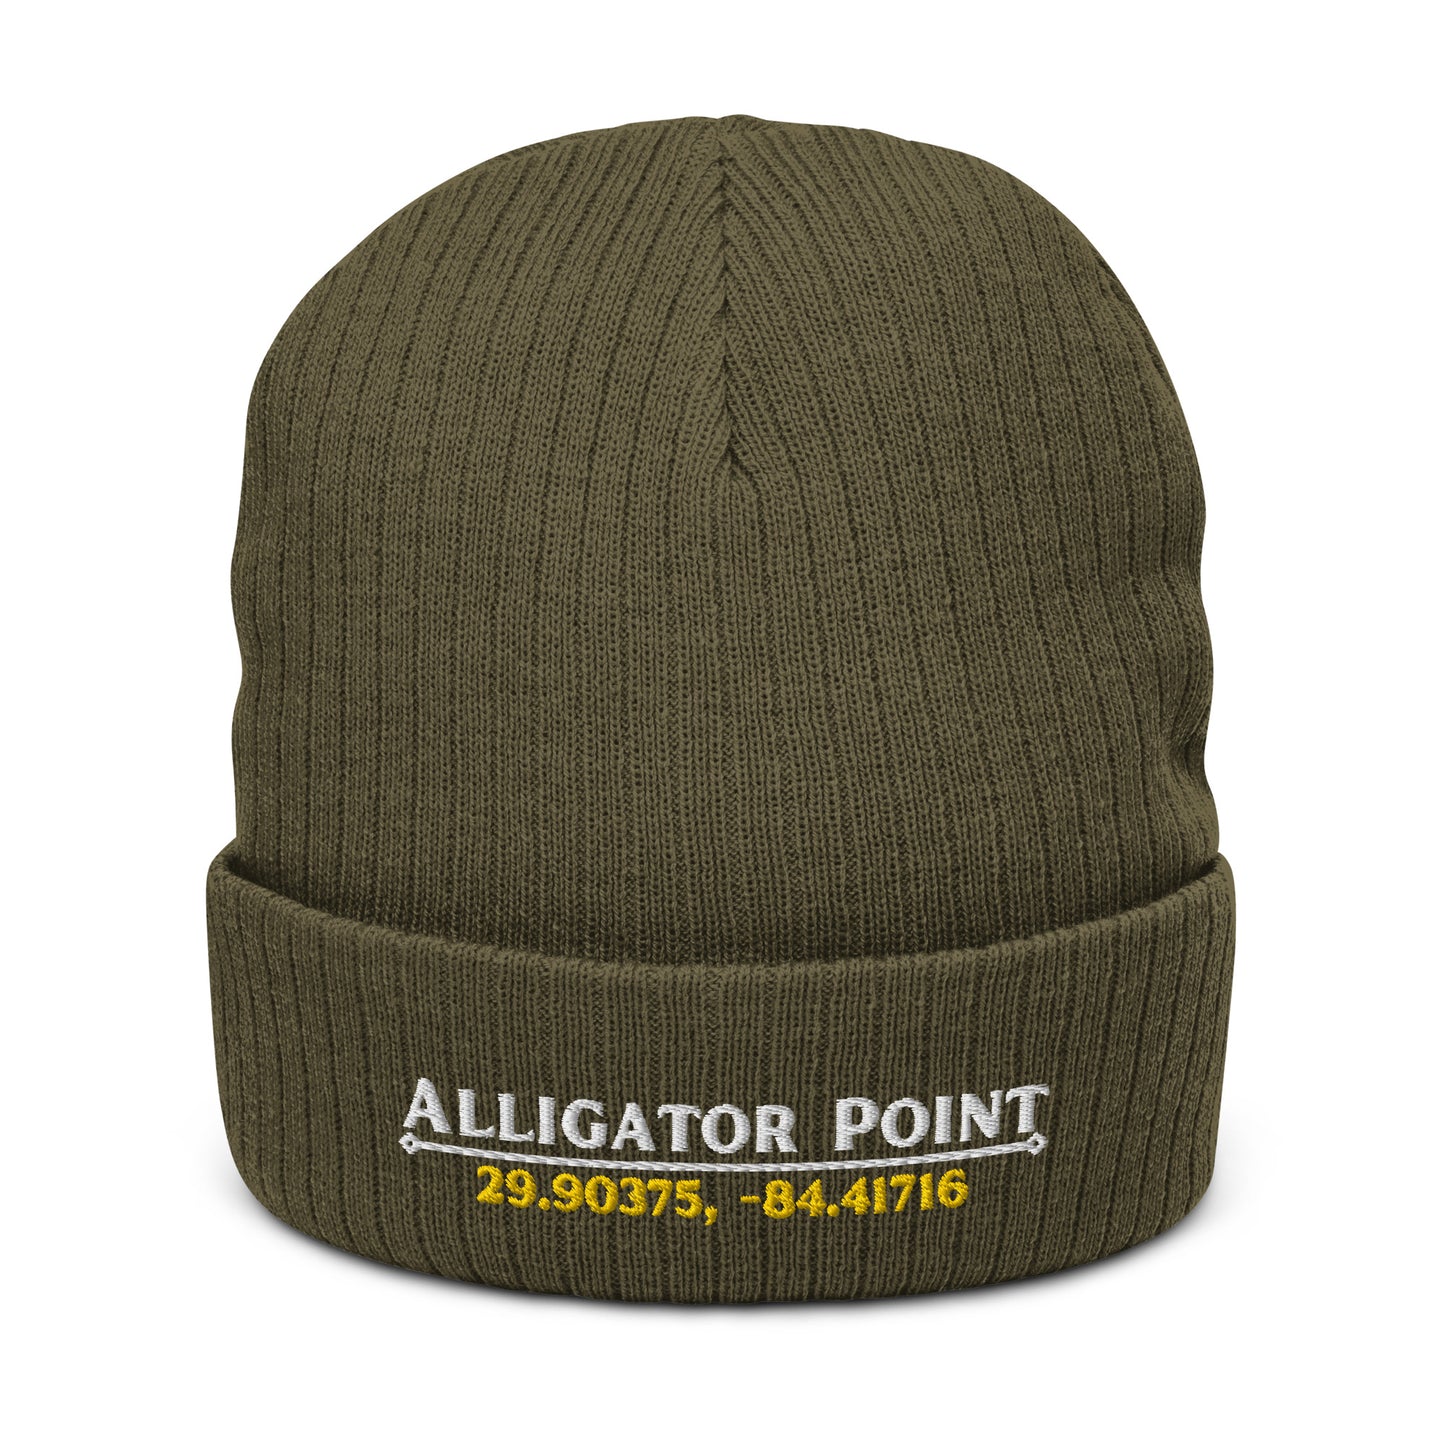 Alligator Point Tiki/Marina Coordinates Cap